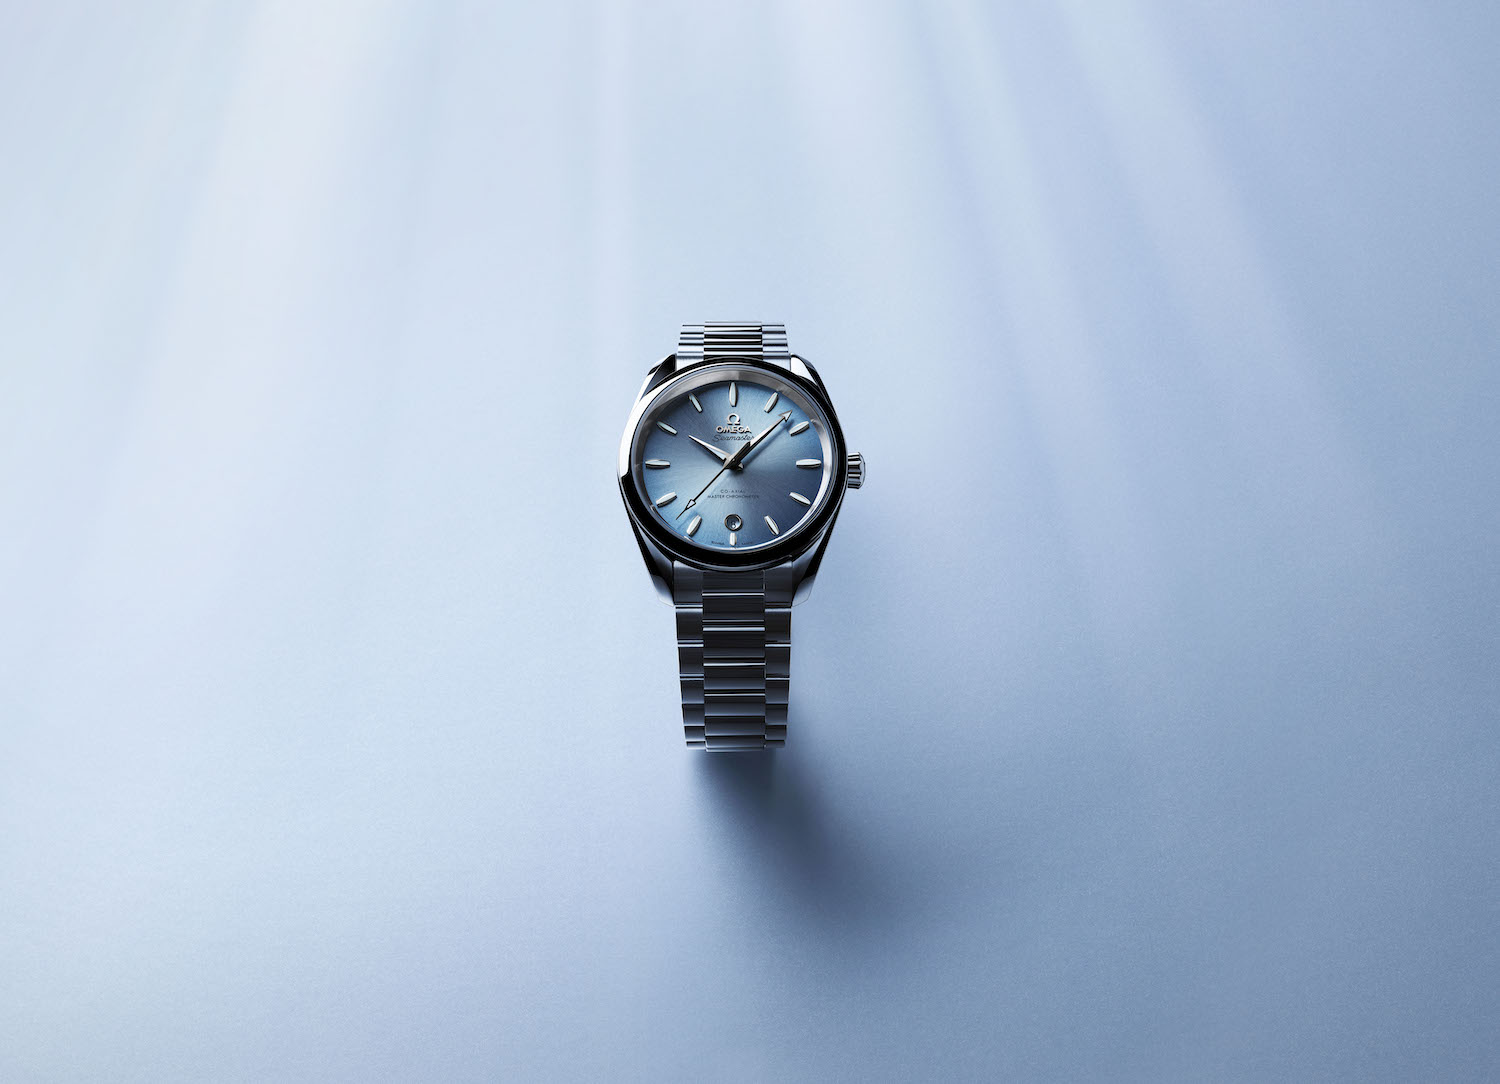 Silver/light blue/gray watch